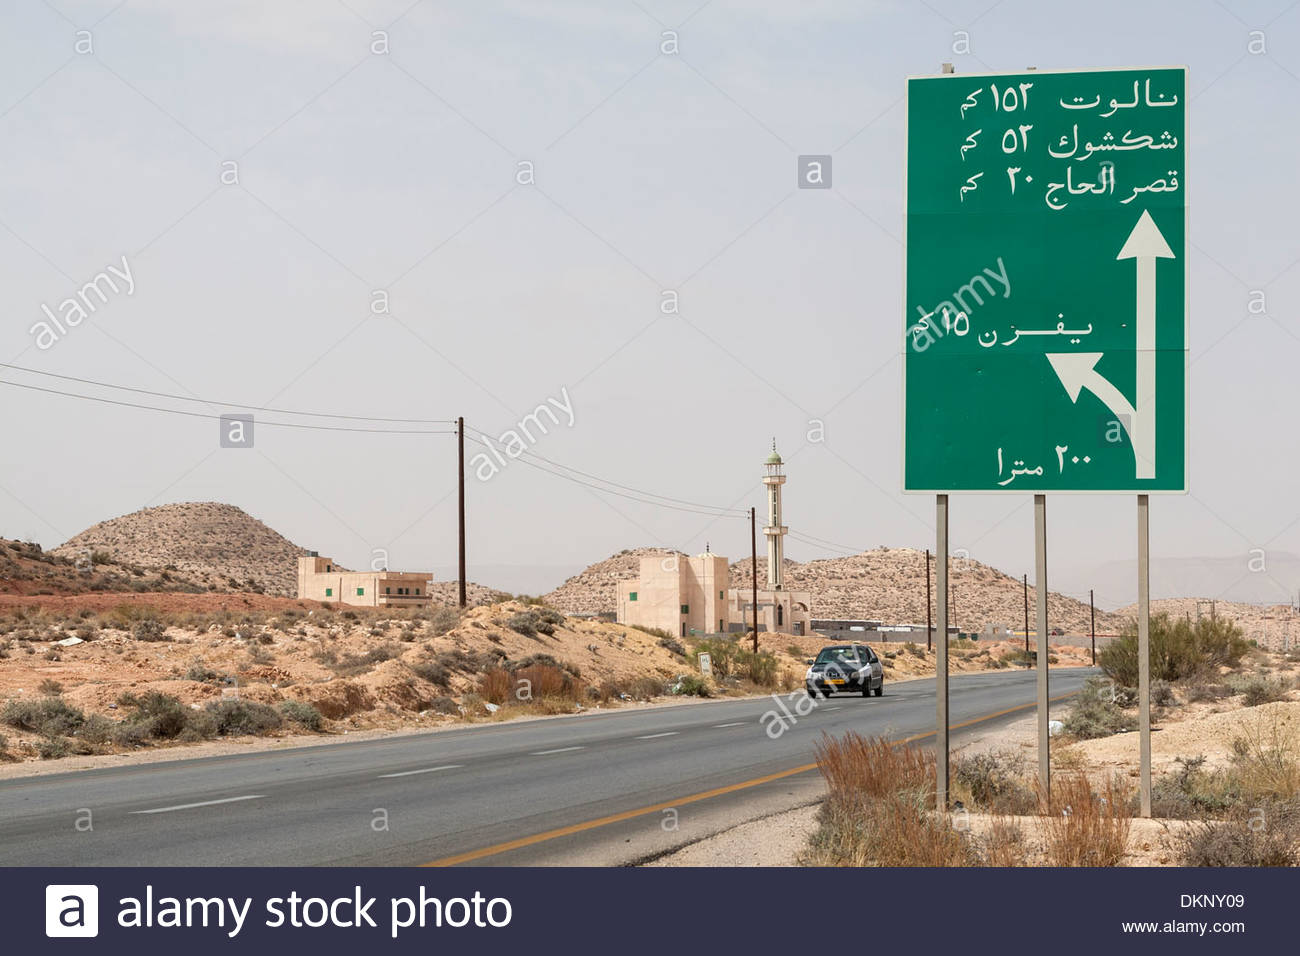 libya-highway-roadsigns-were-only-in-arabic-during-the-qadhafi-era-DKNY09.jpg